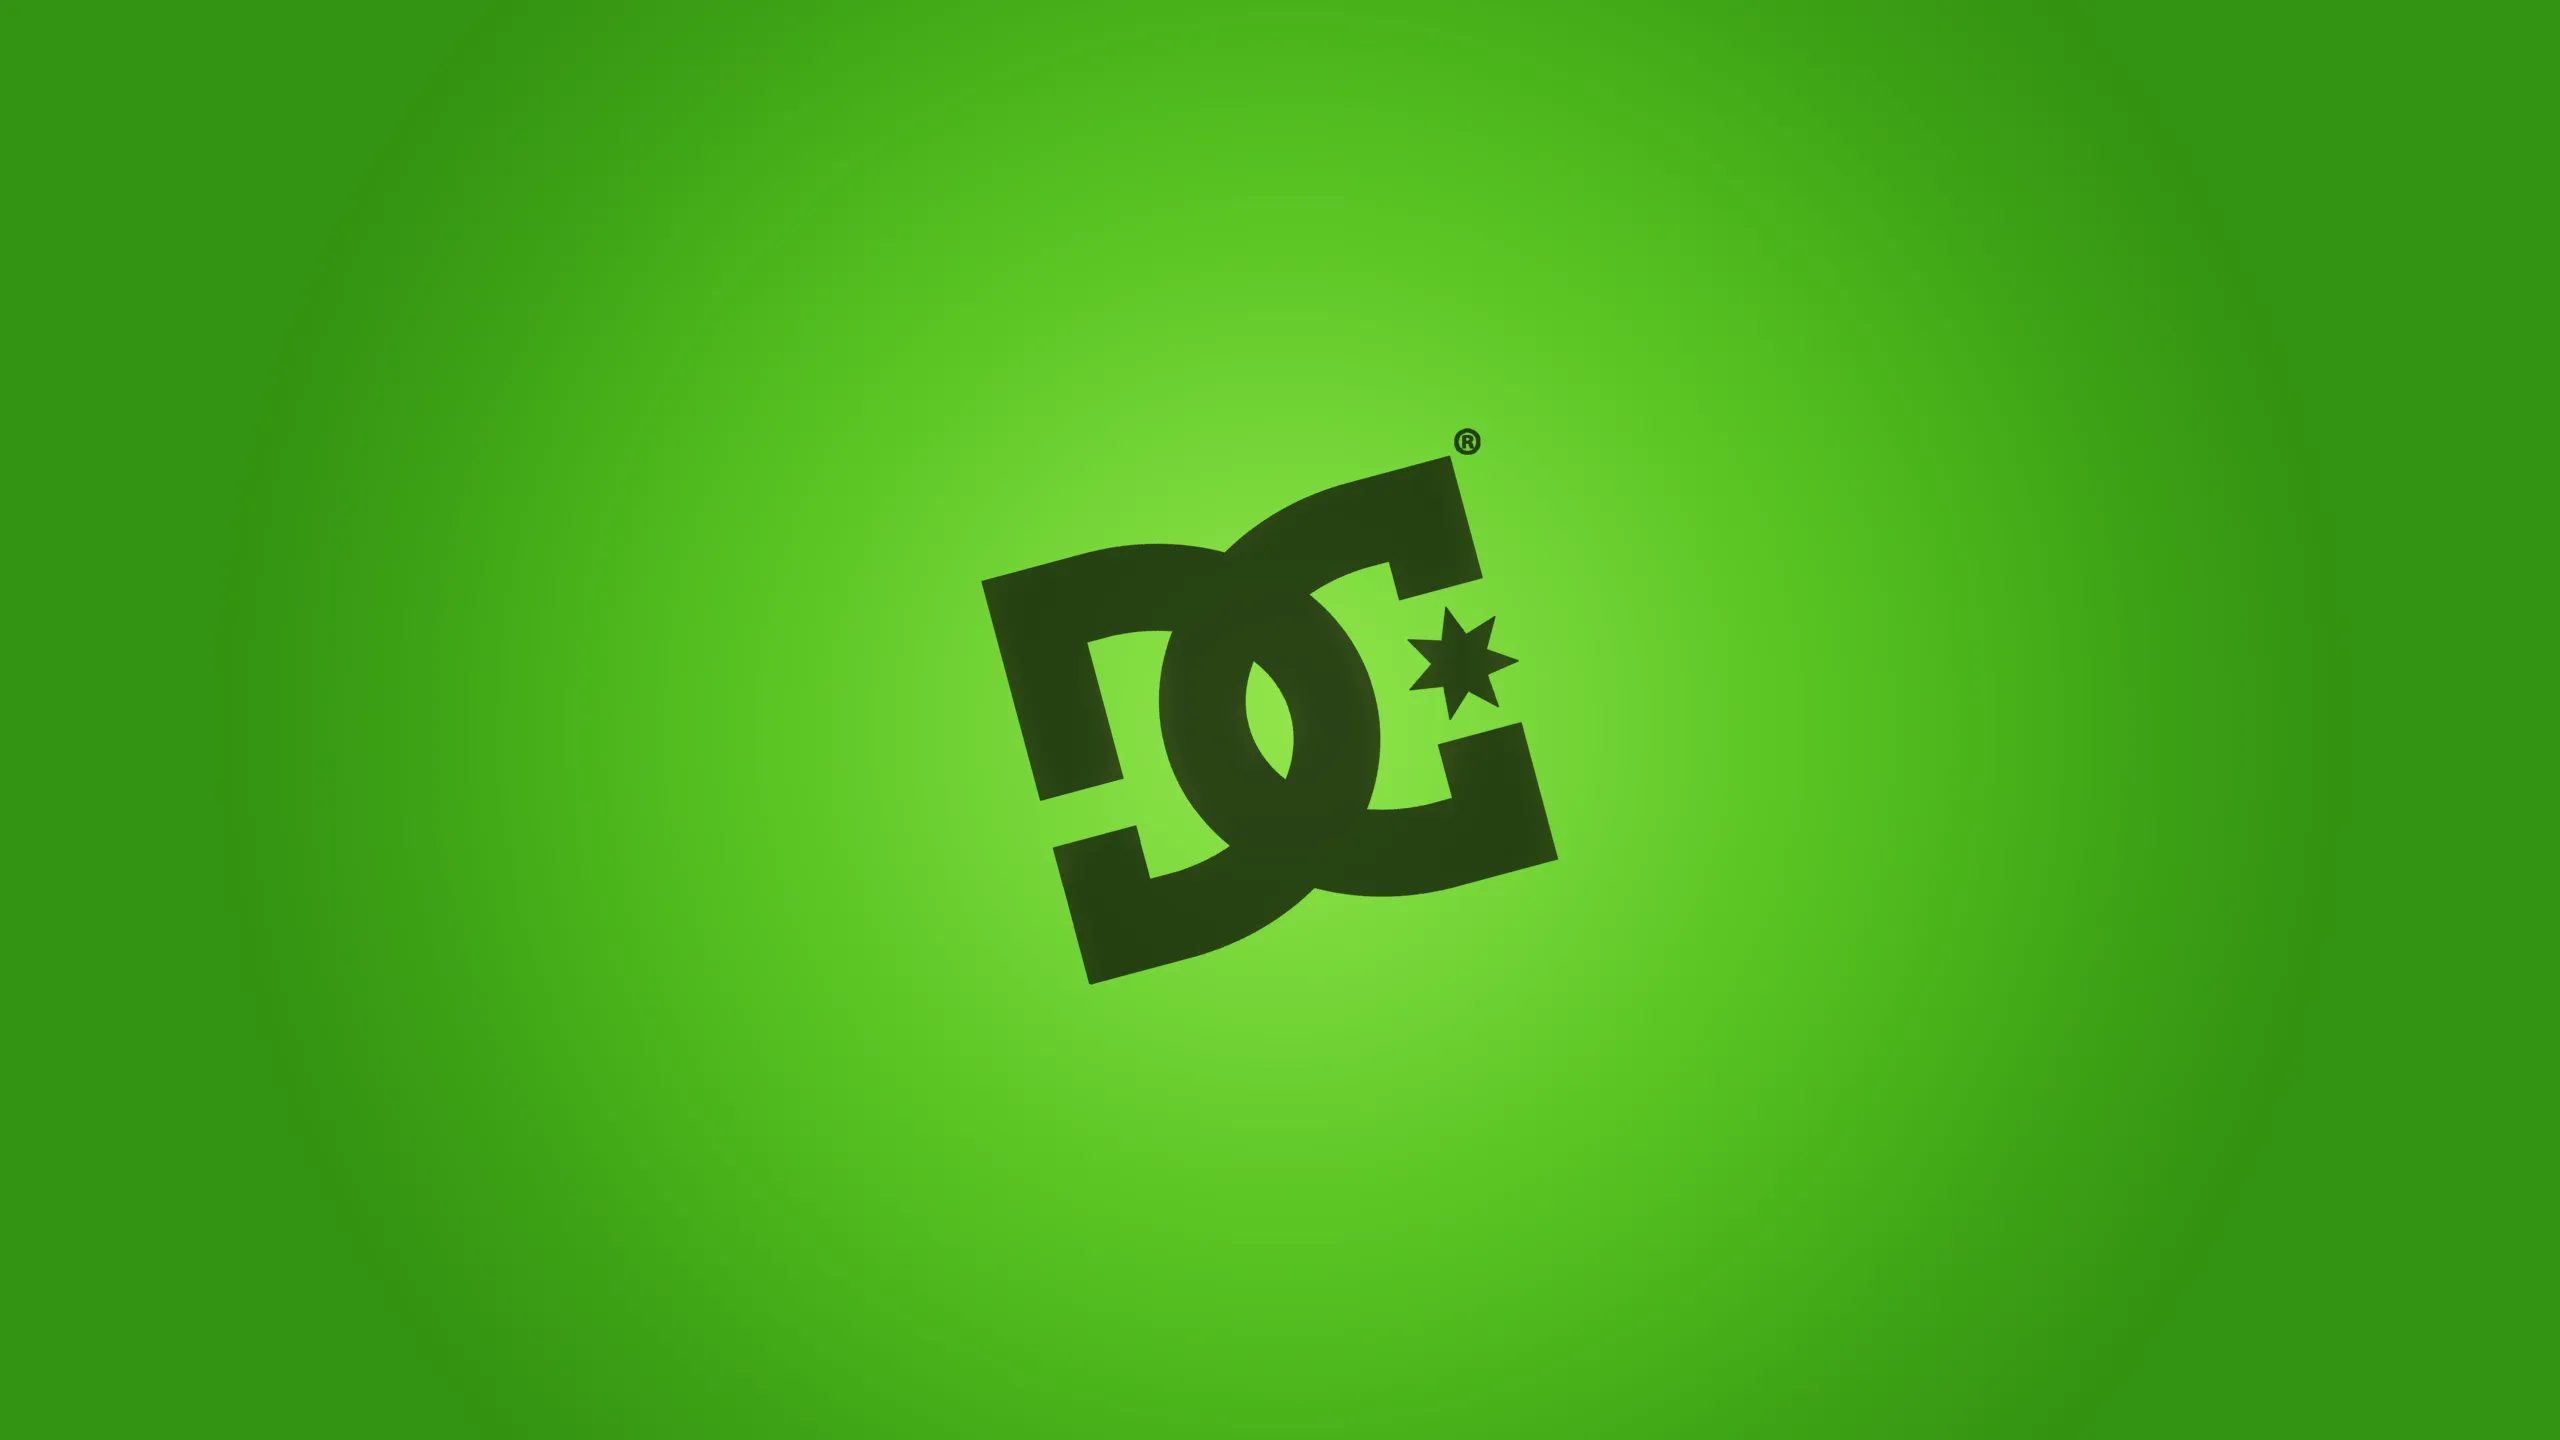 DC Shoes Black Logo in Green Wallpaper HD Widescreen | Decor ideas ...